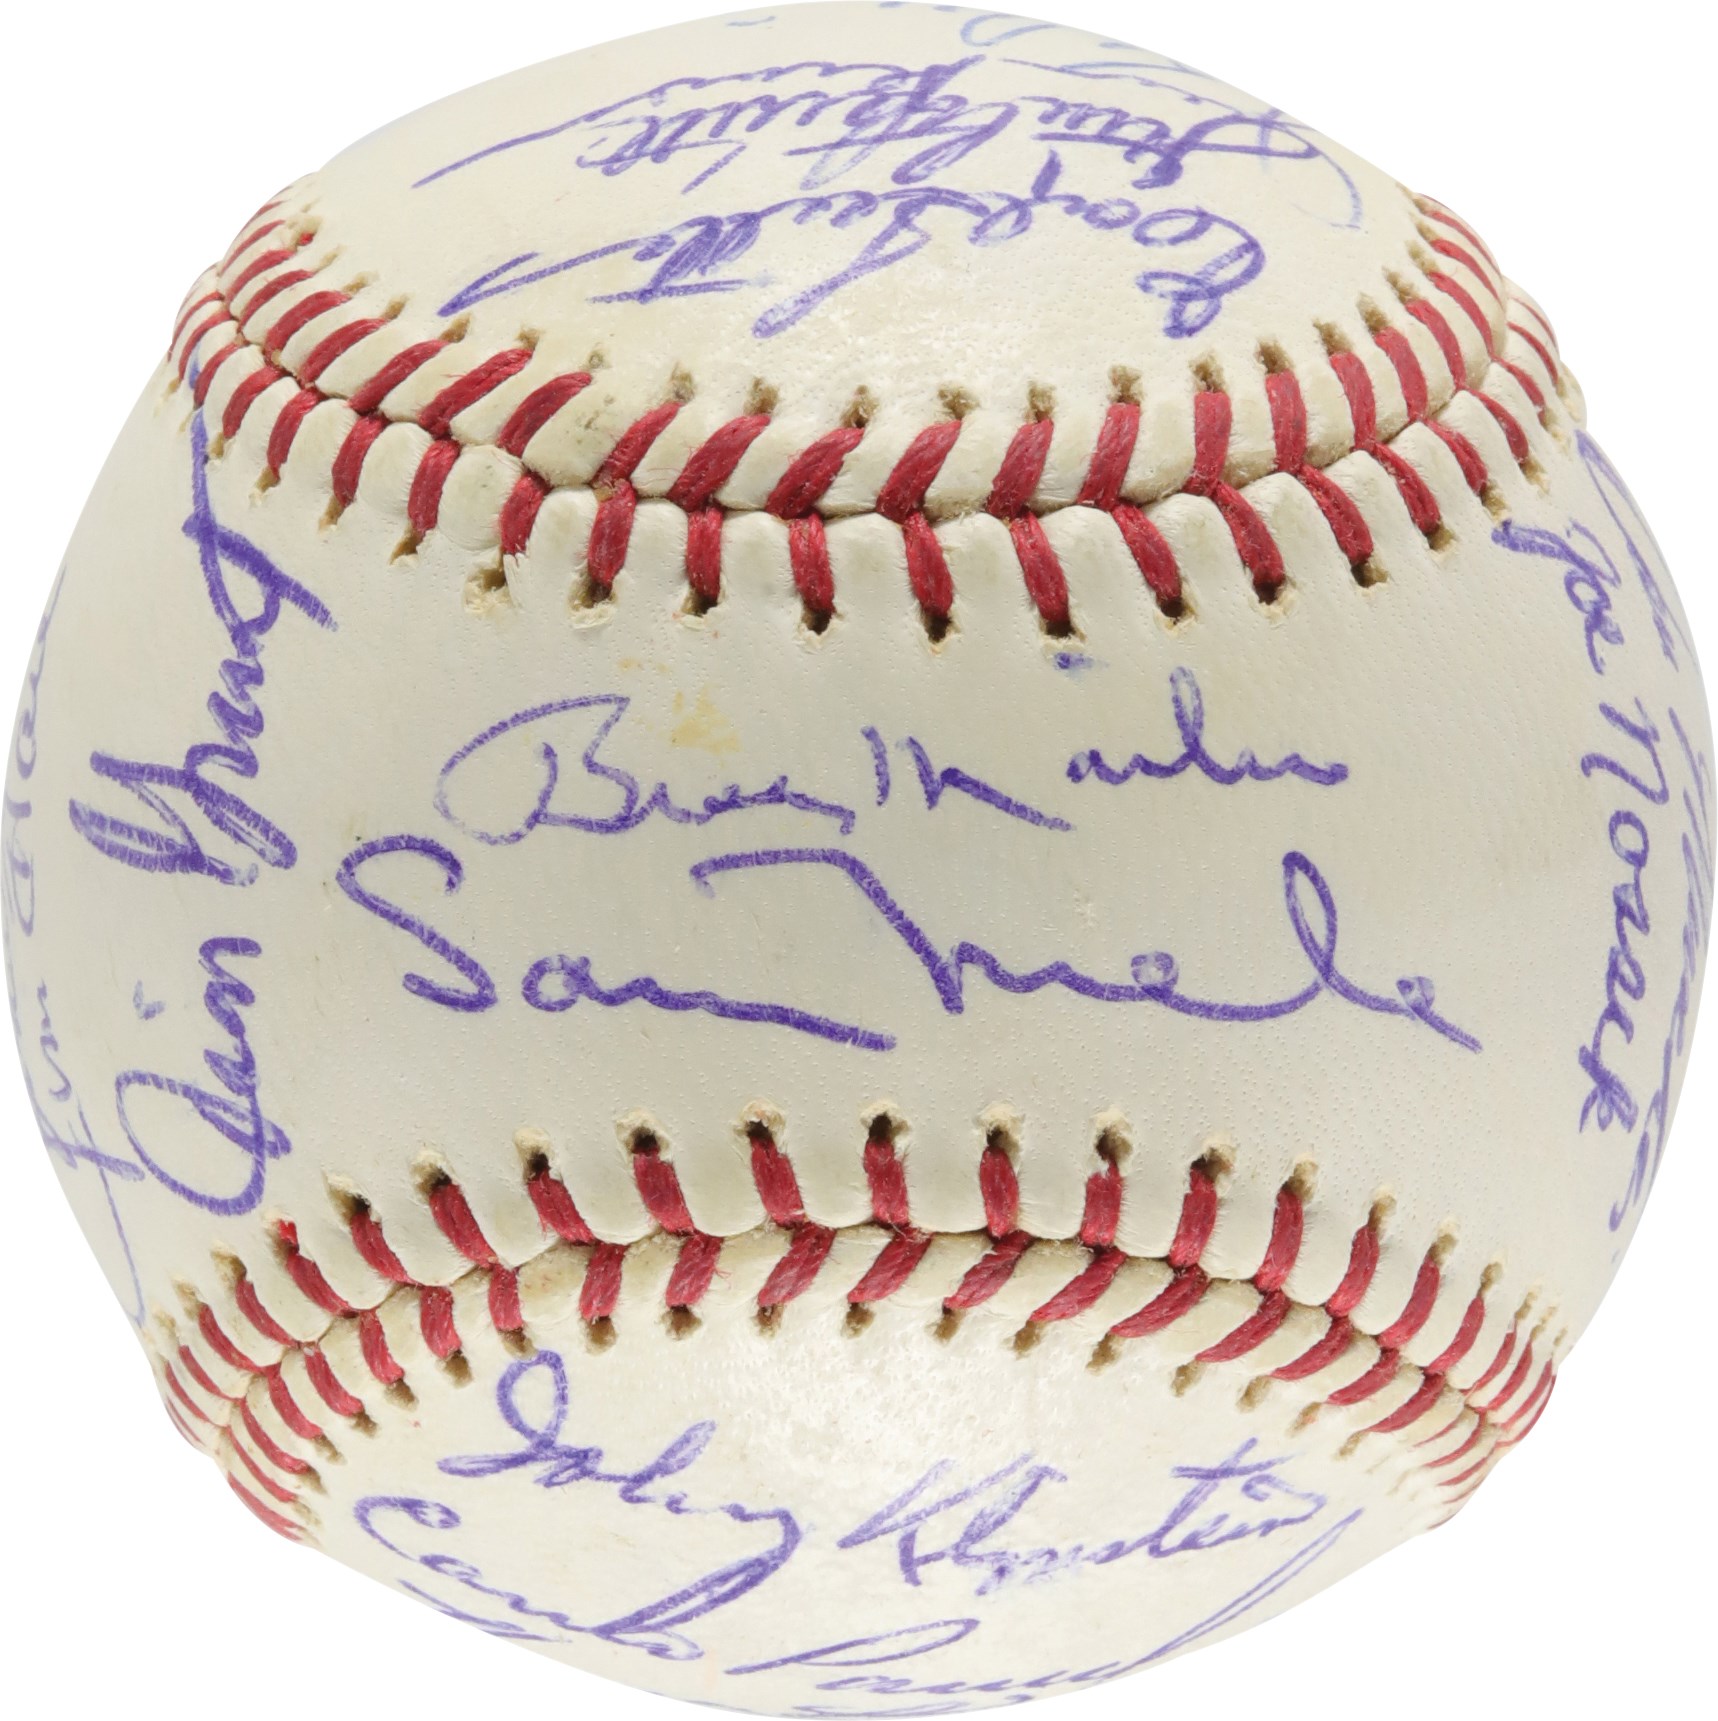 - High Grade 1965 American League Champion Minnesota Twins Team-Signed Baseball